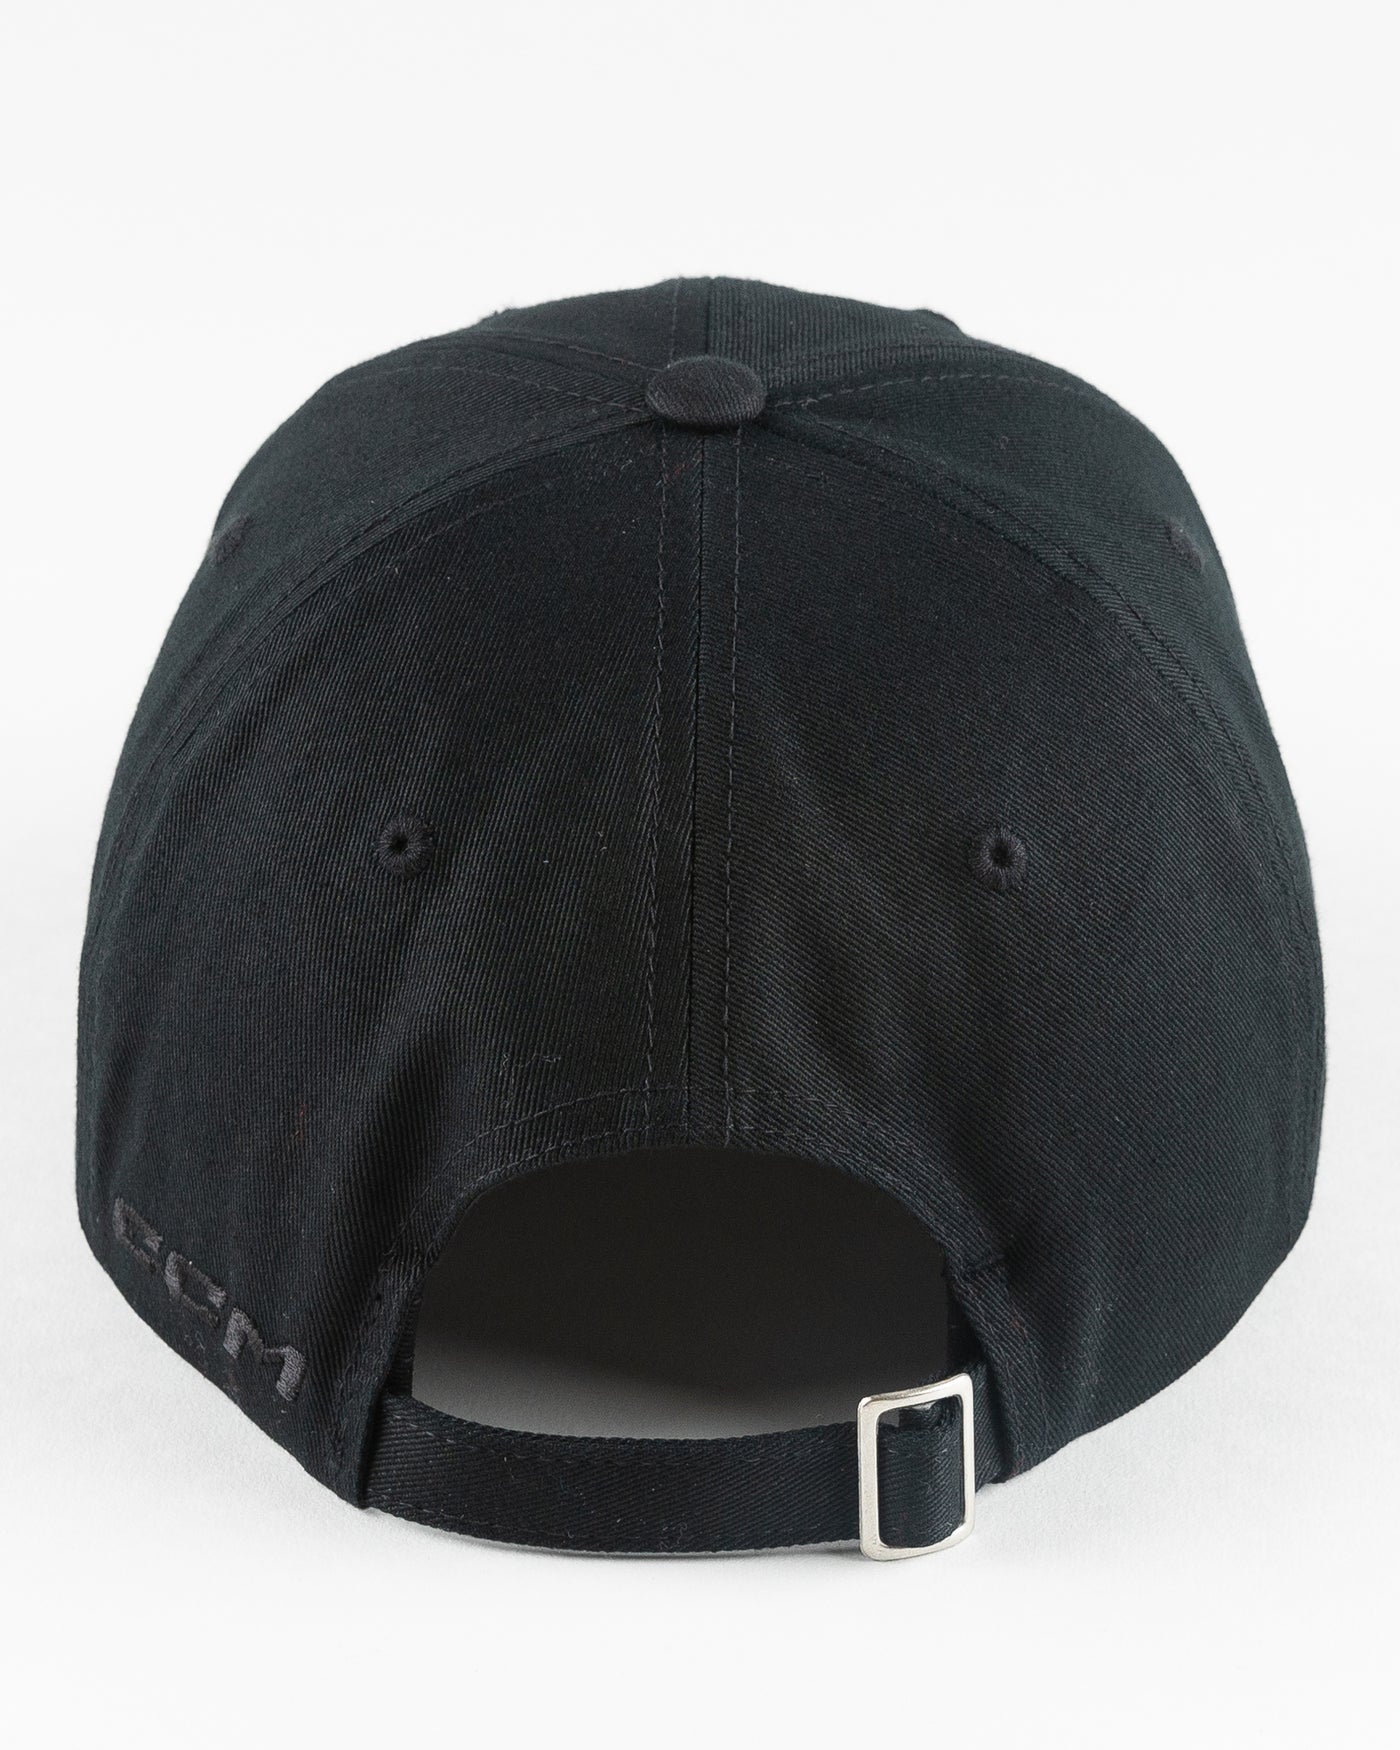 black Rockford IceHogs CCM baseball cap - back lay flat